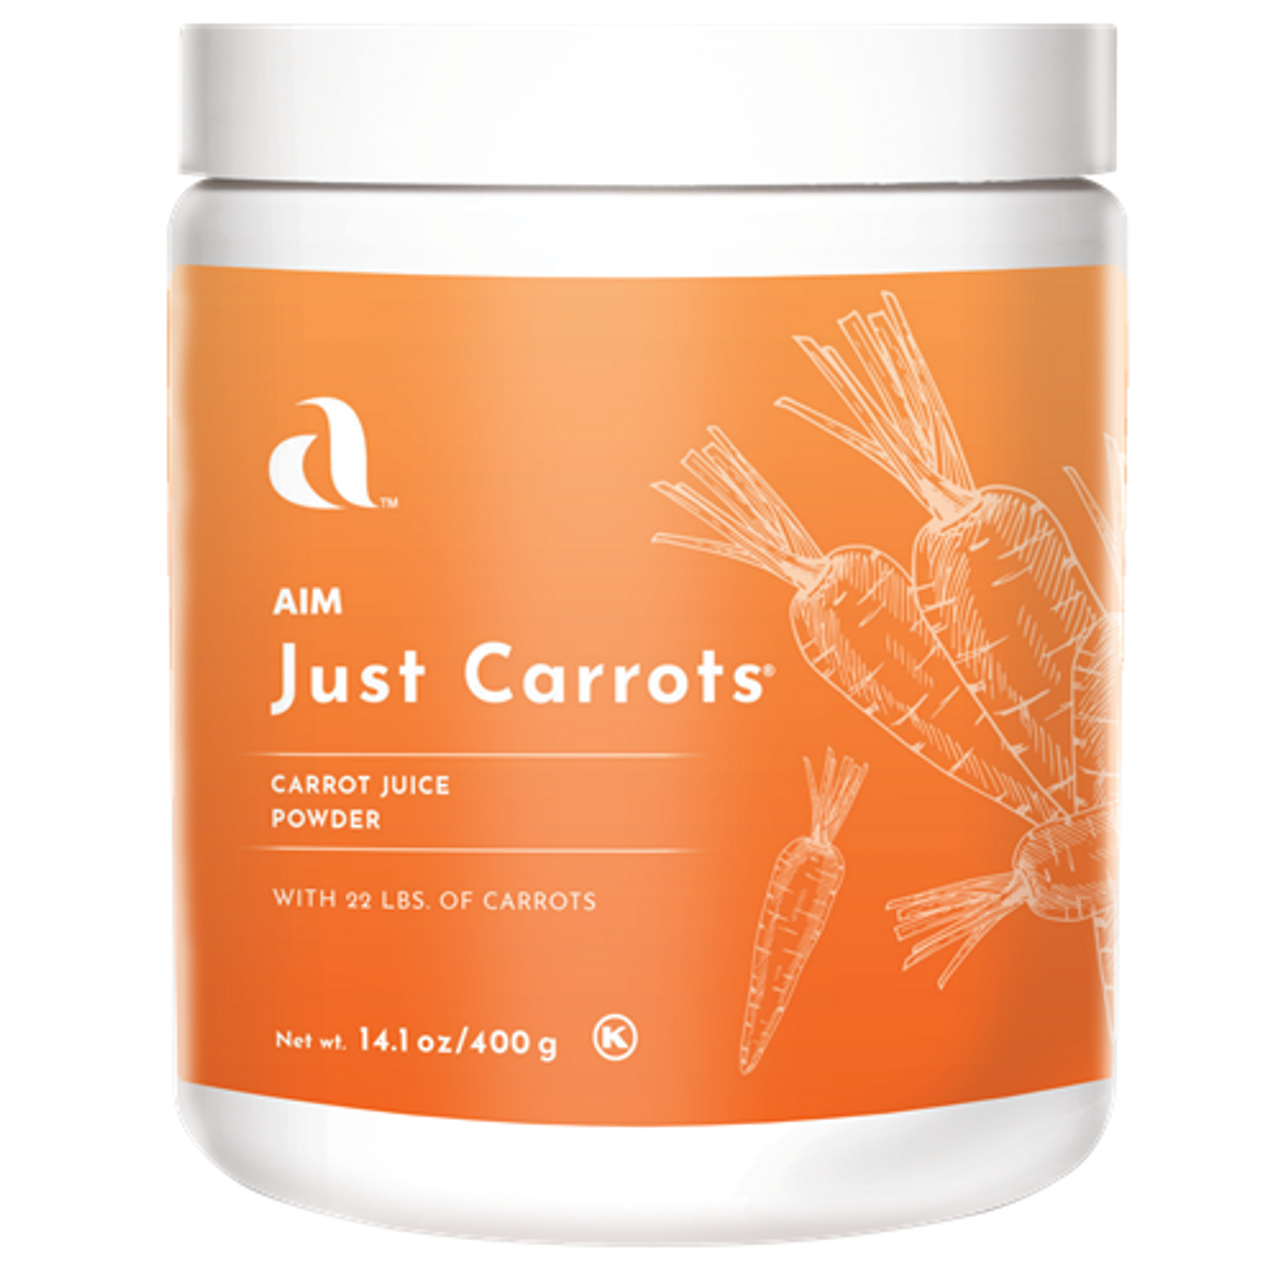 Just Carrots (14.1 oz/400 g powder)